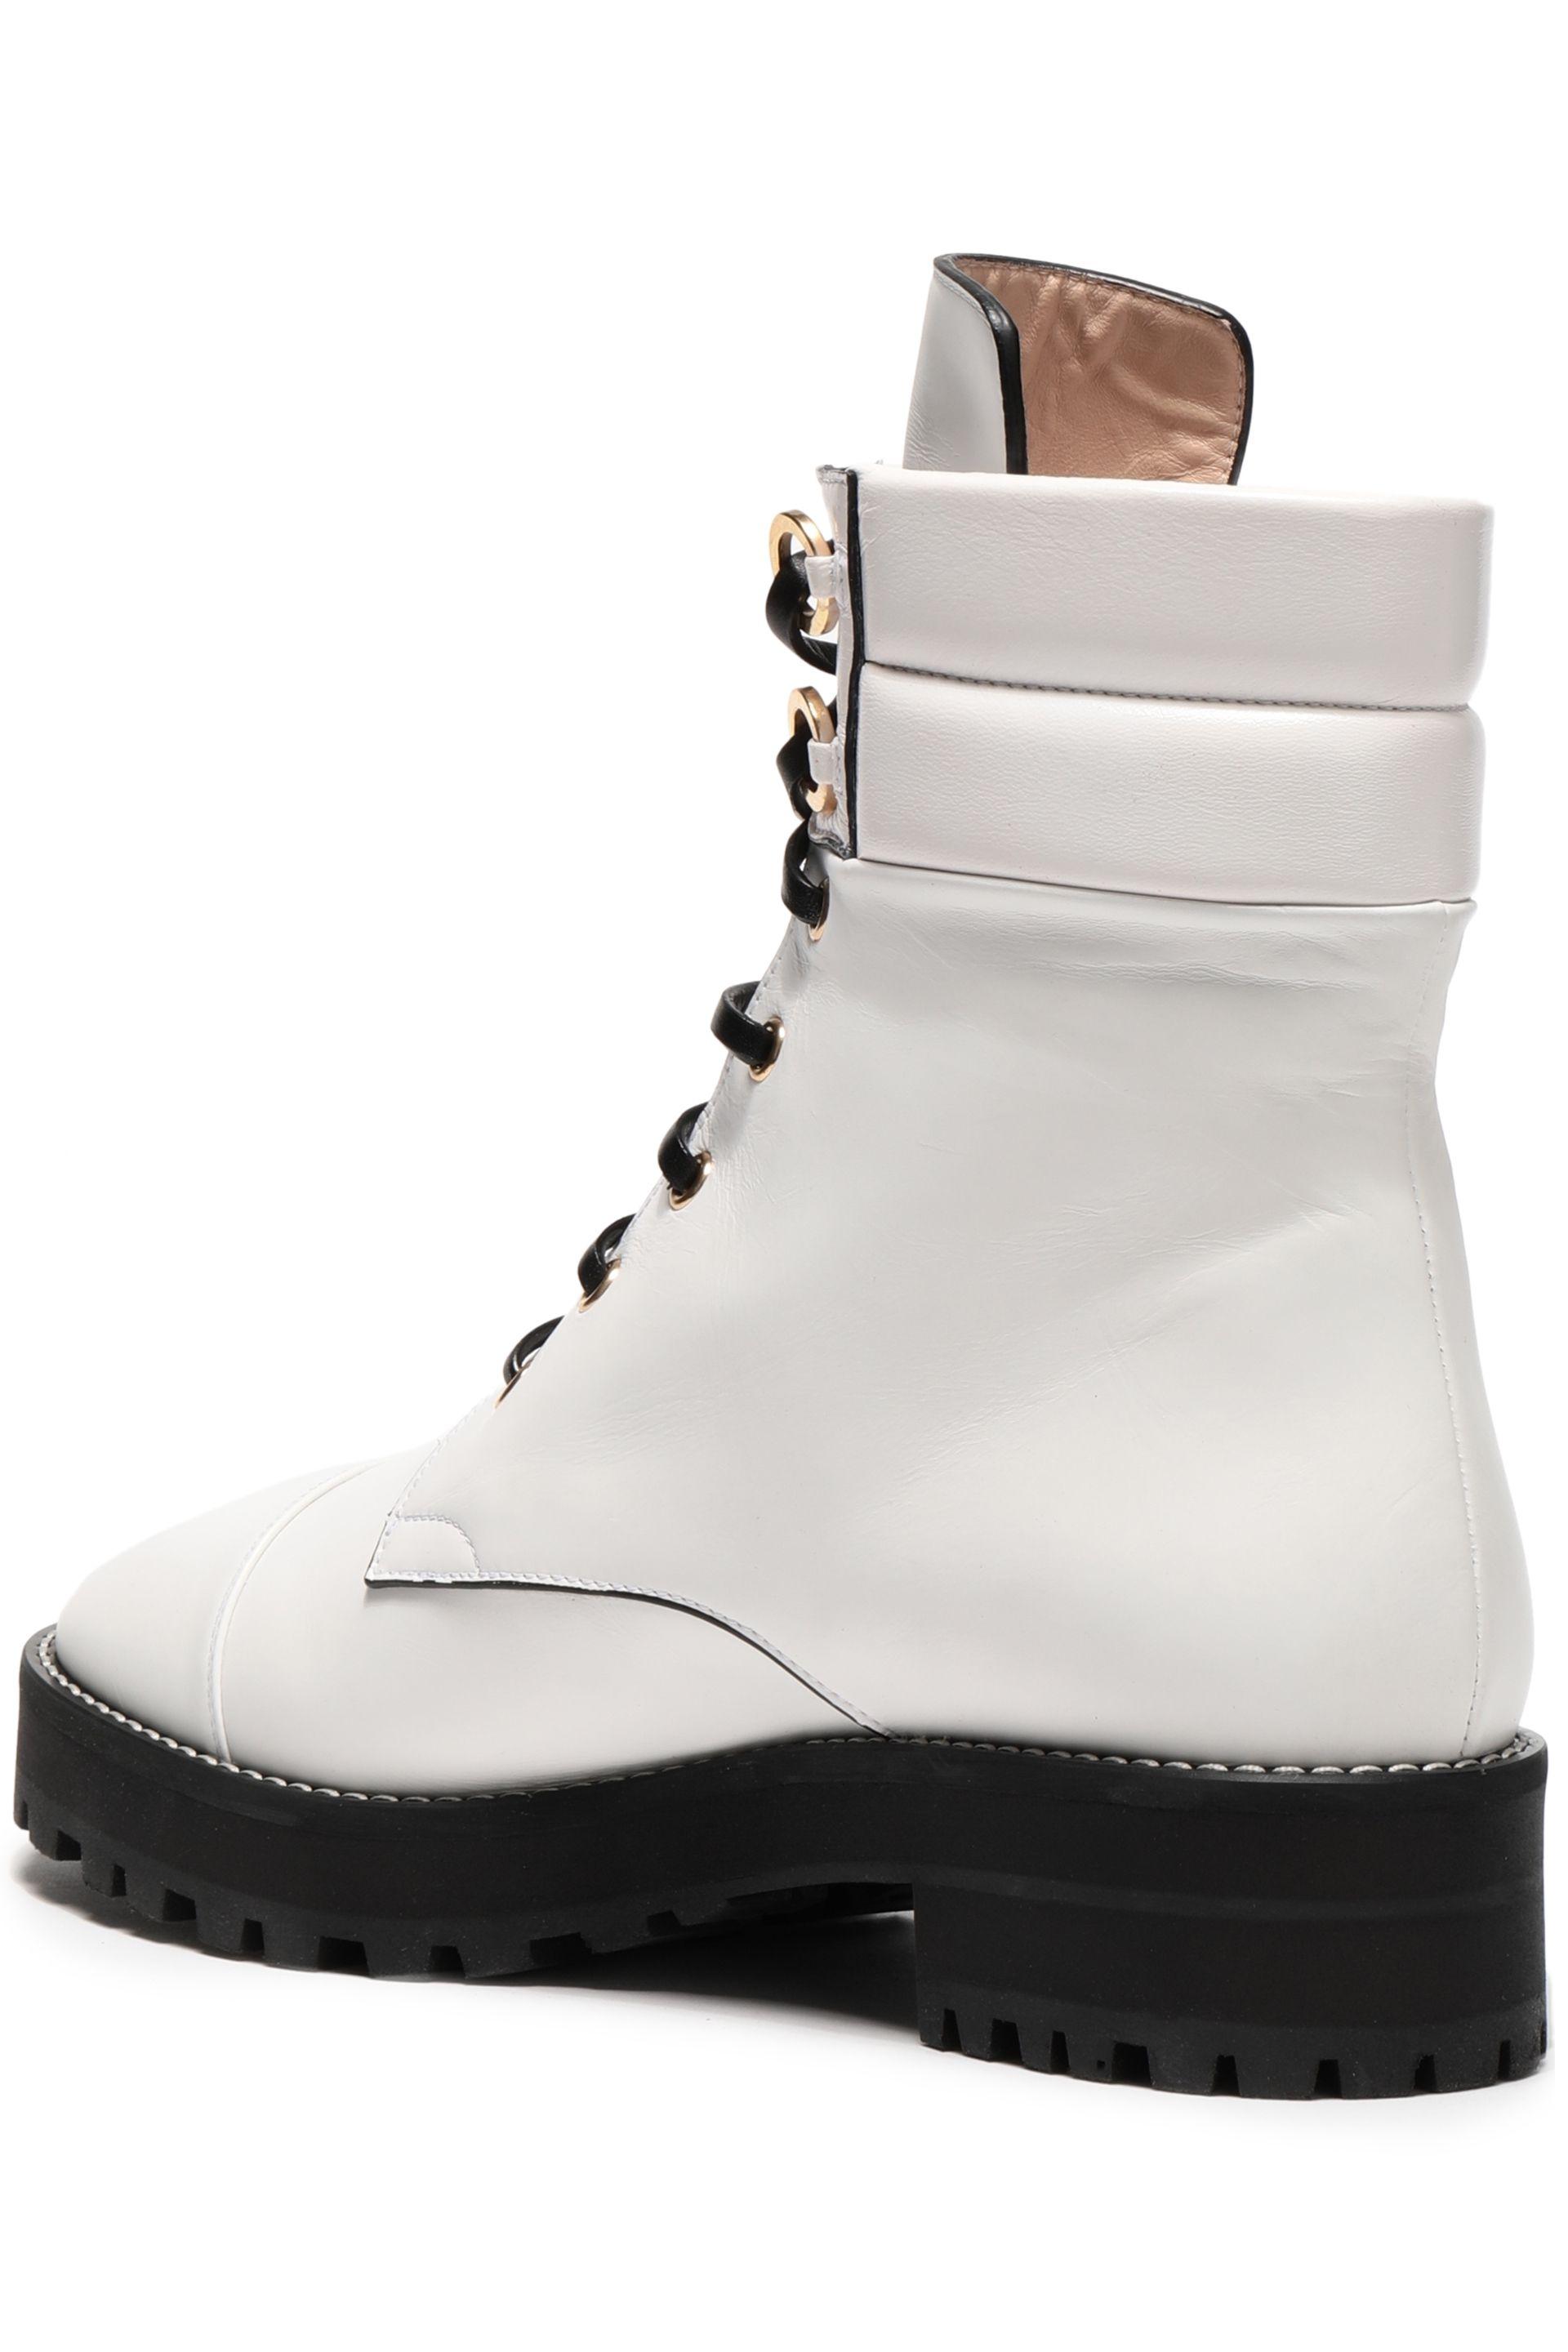 Stuart Weitzman Embellished Leather Ankle Boots White - Lyst